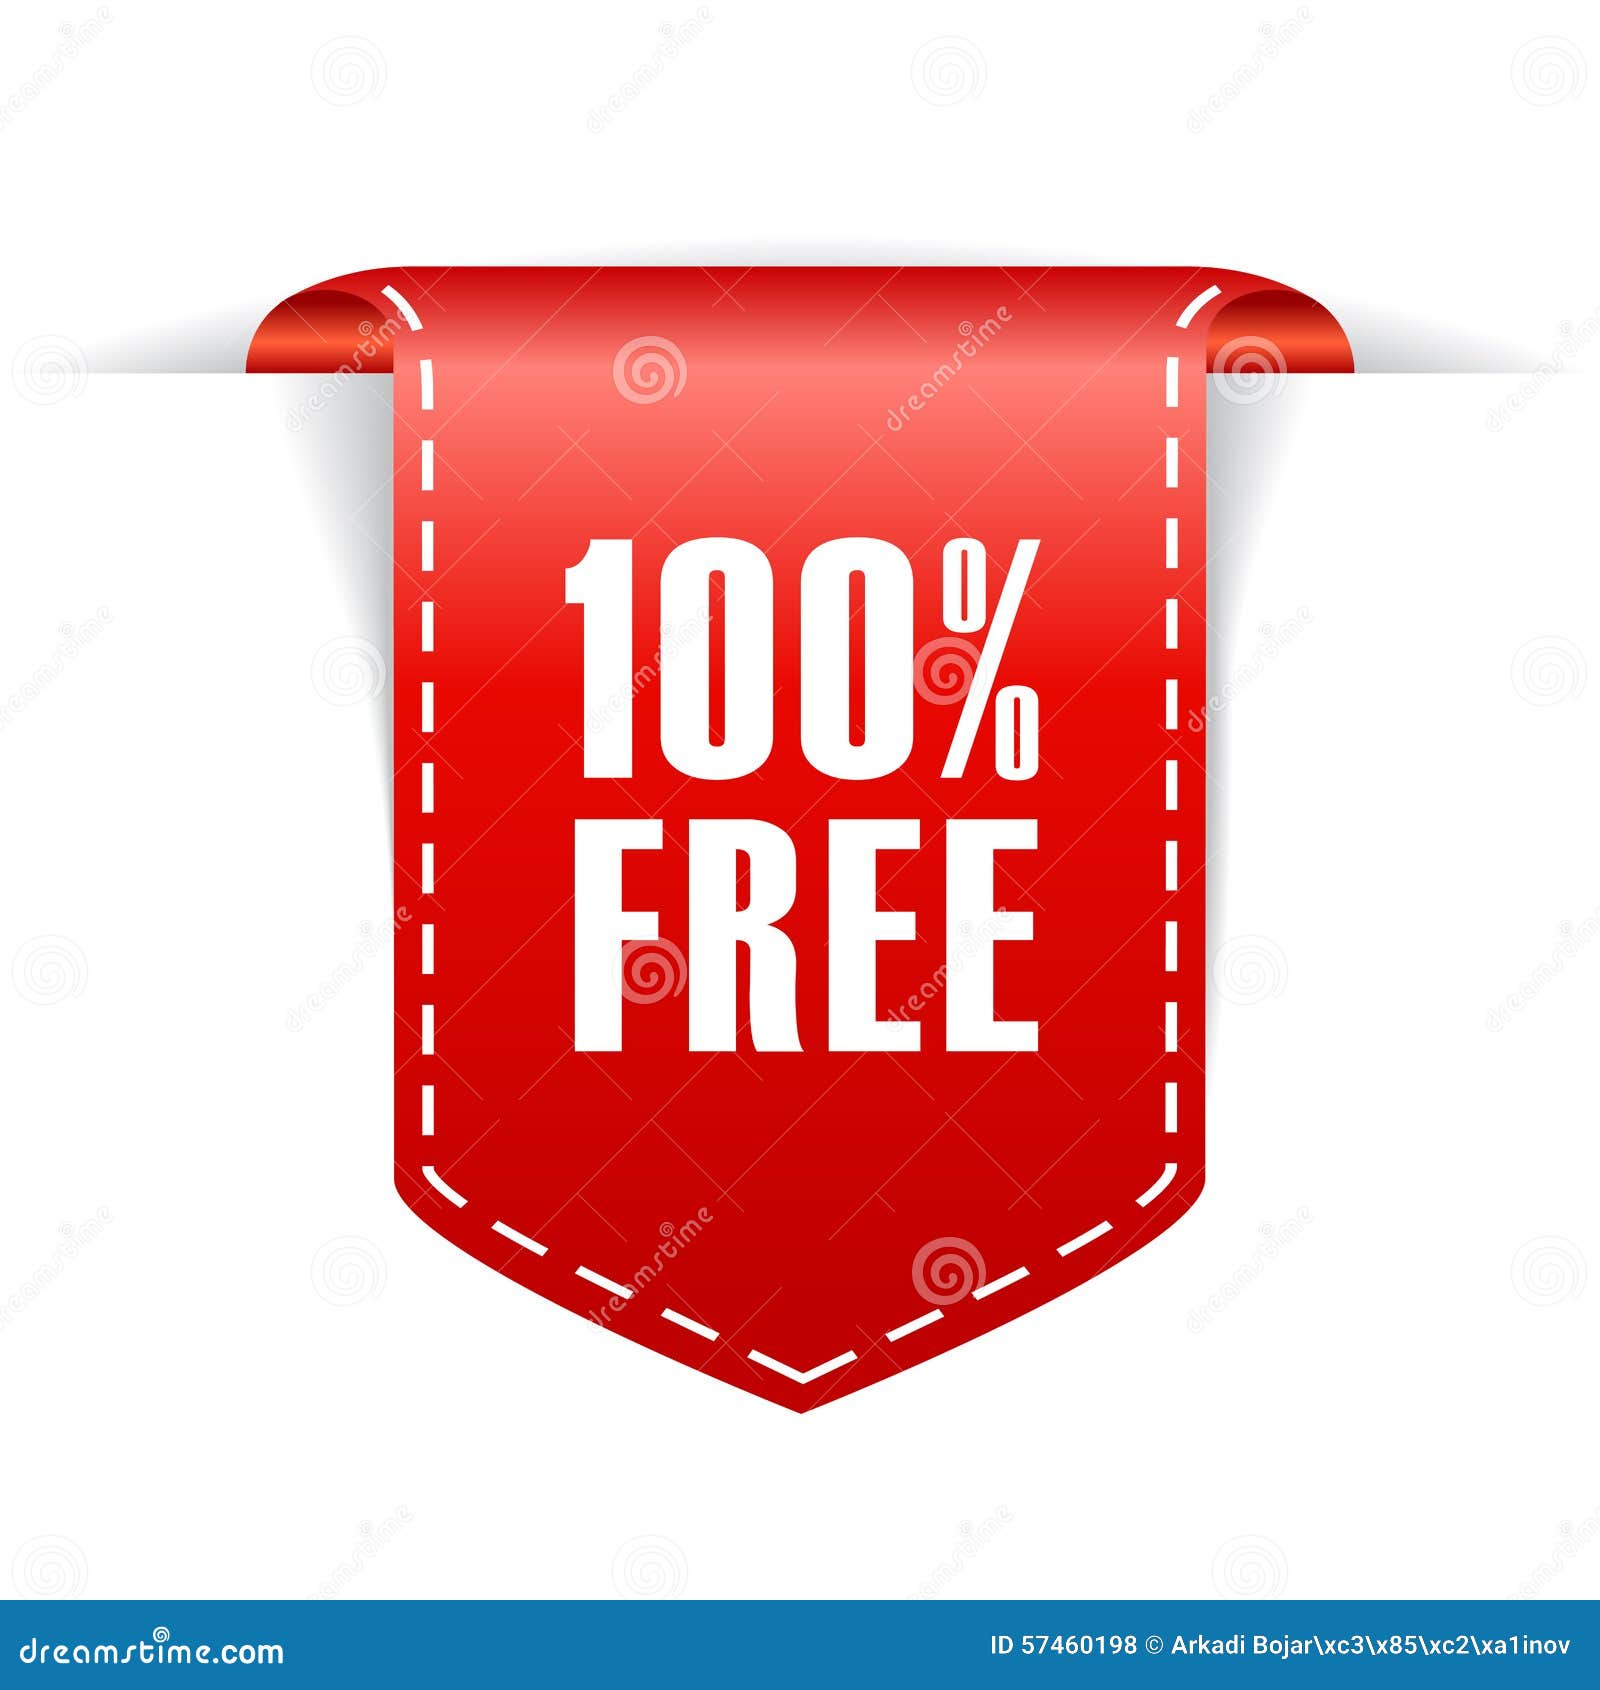 100% Free